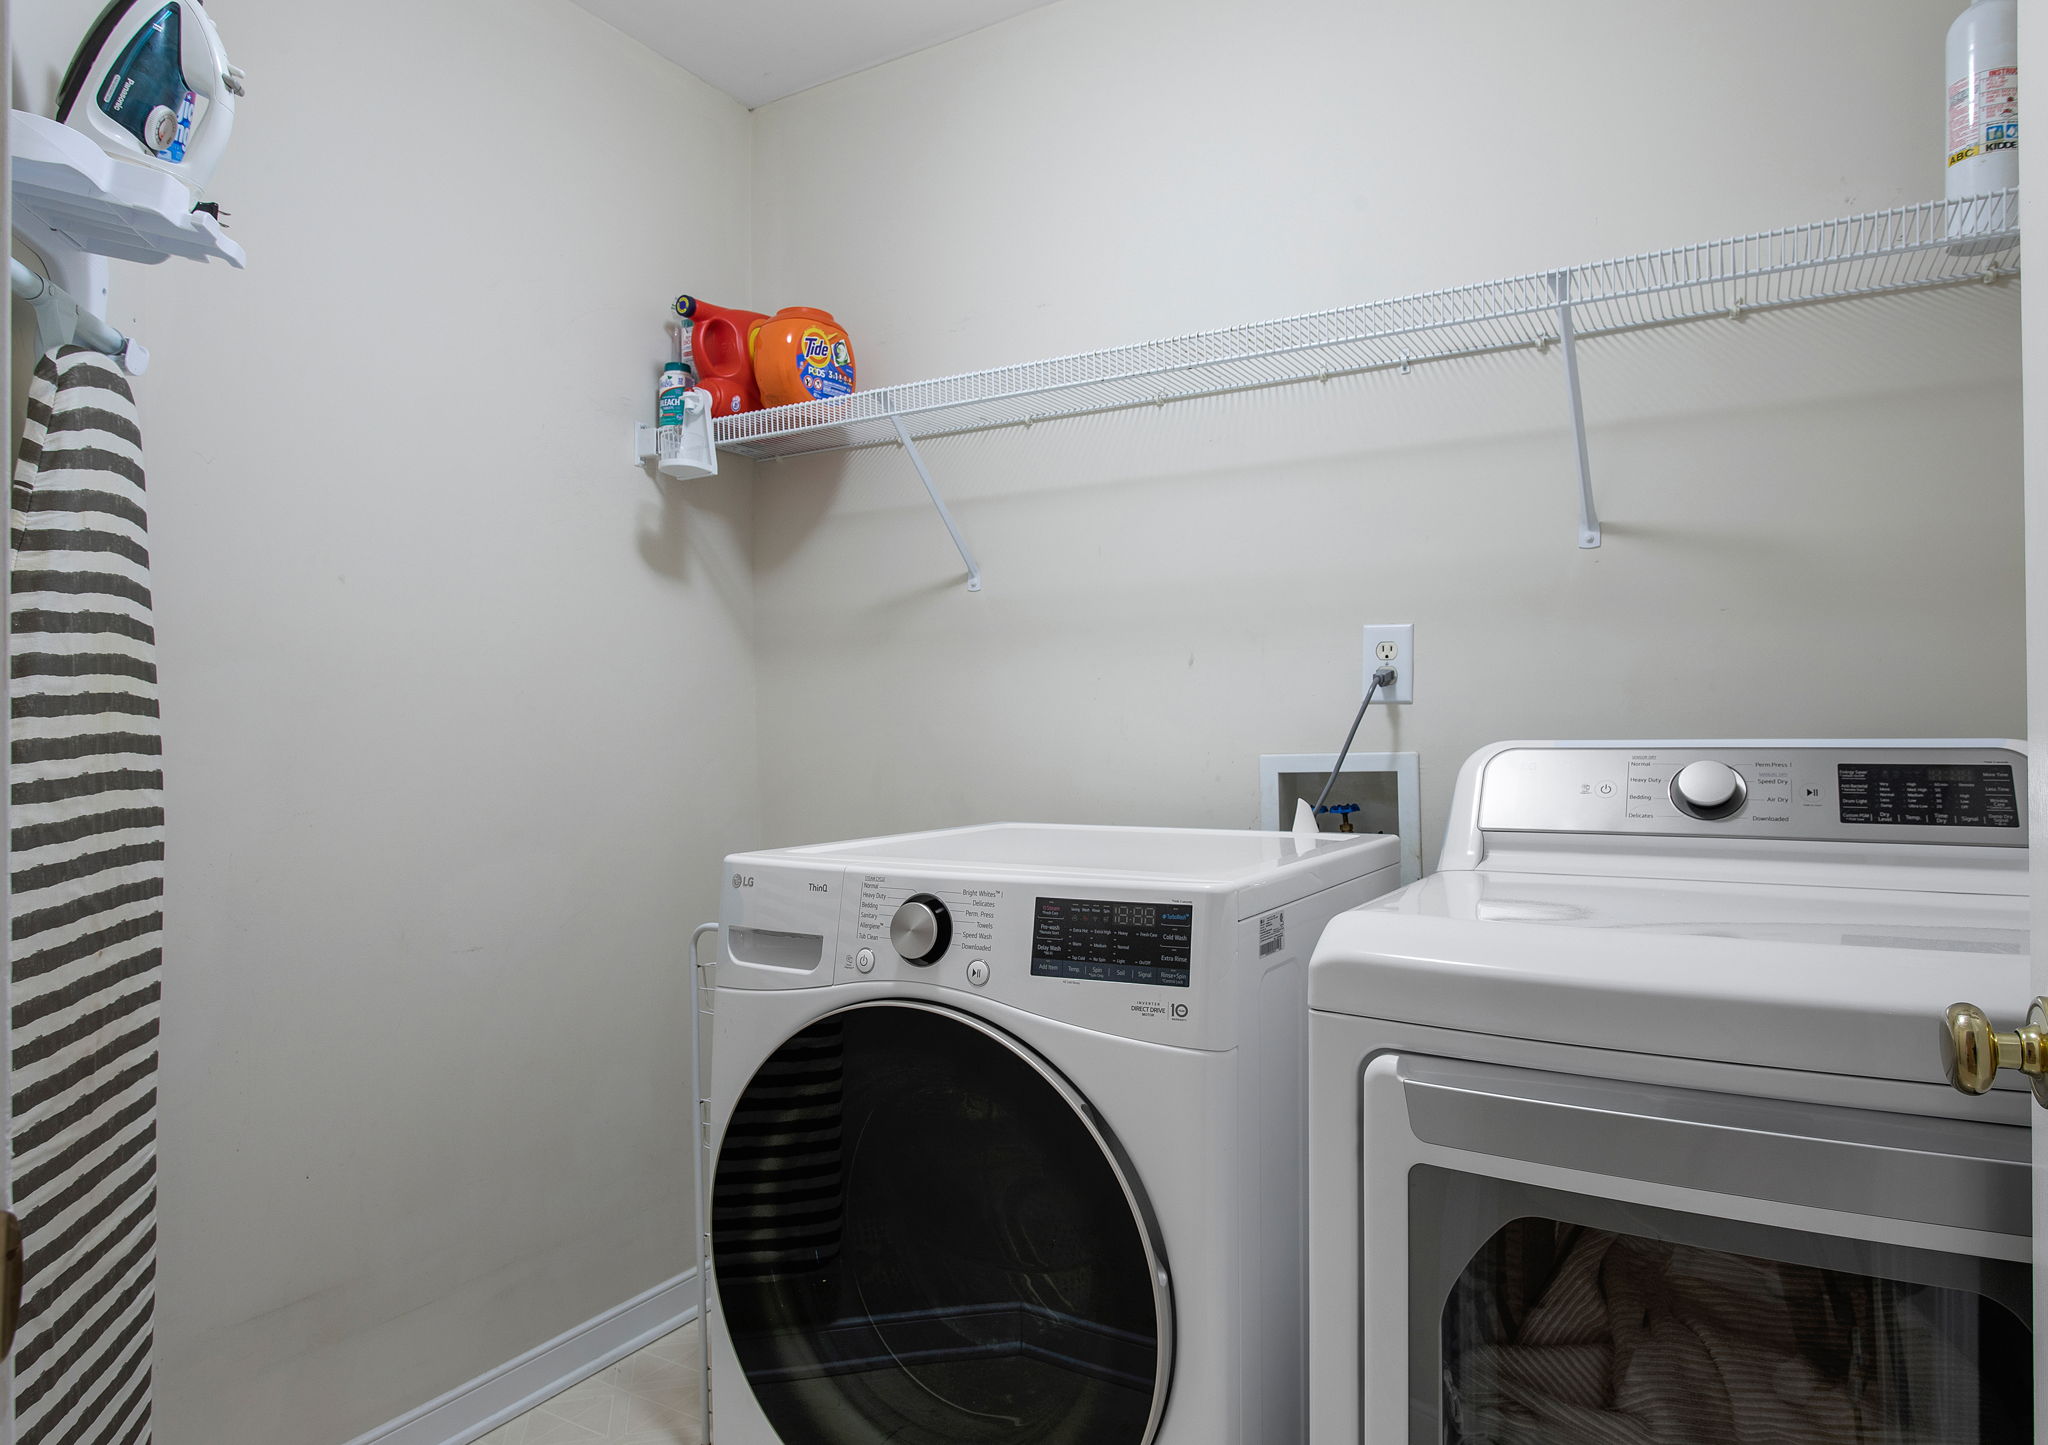 36-Laundry Room